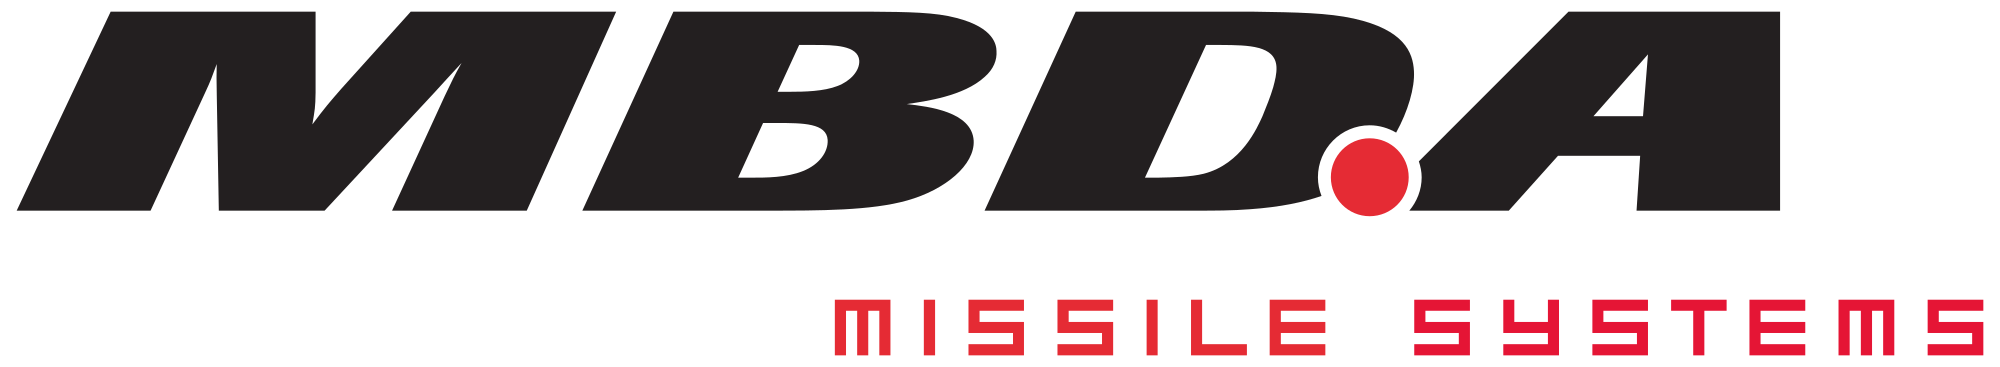 MBDA missile systems logo